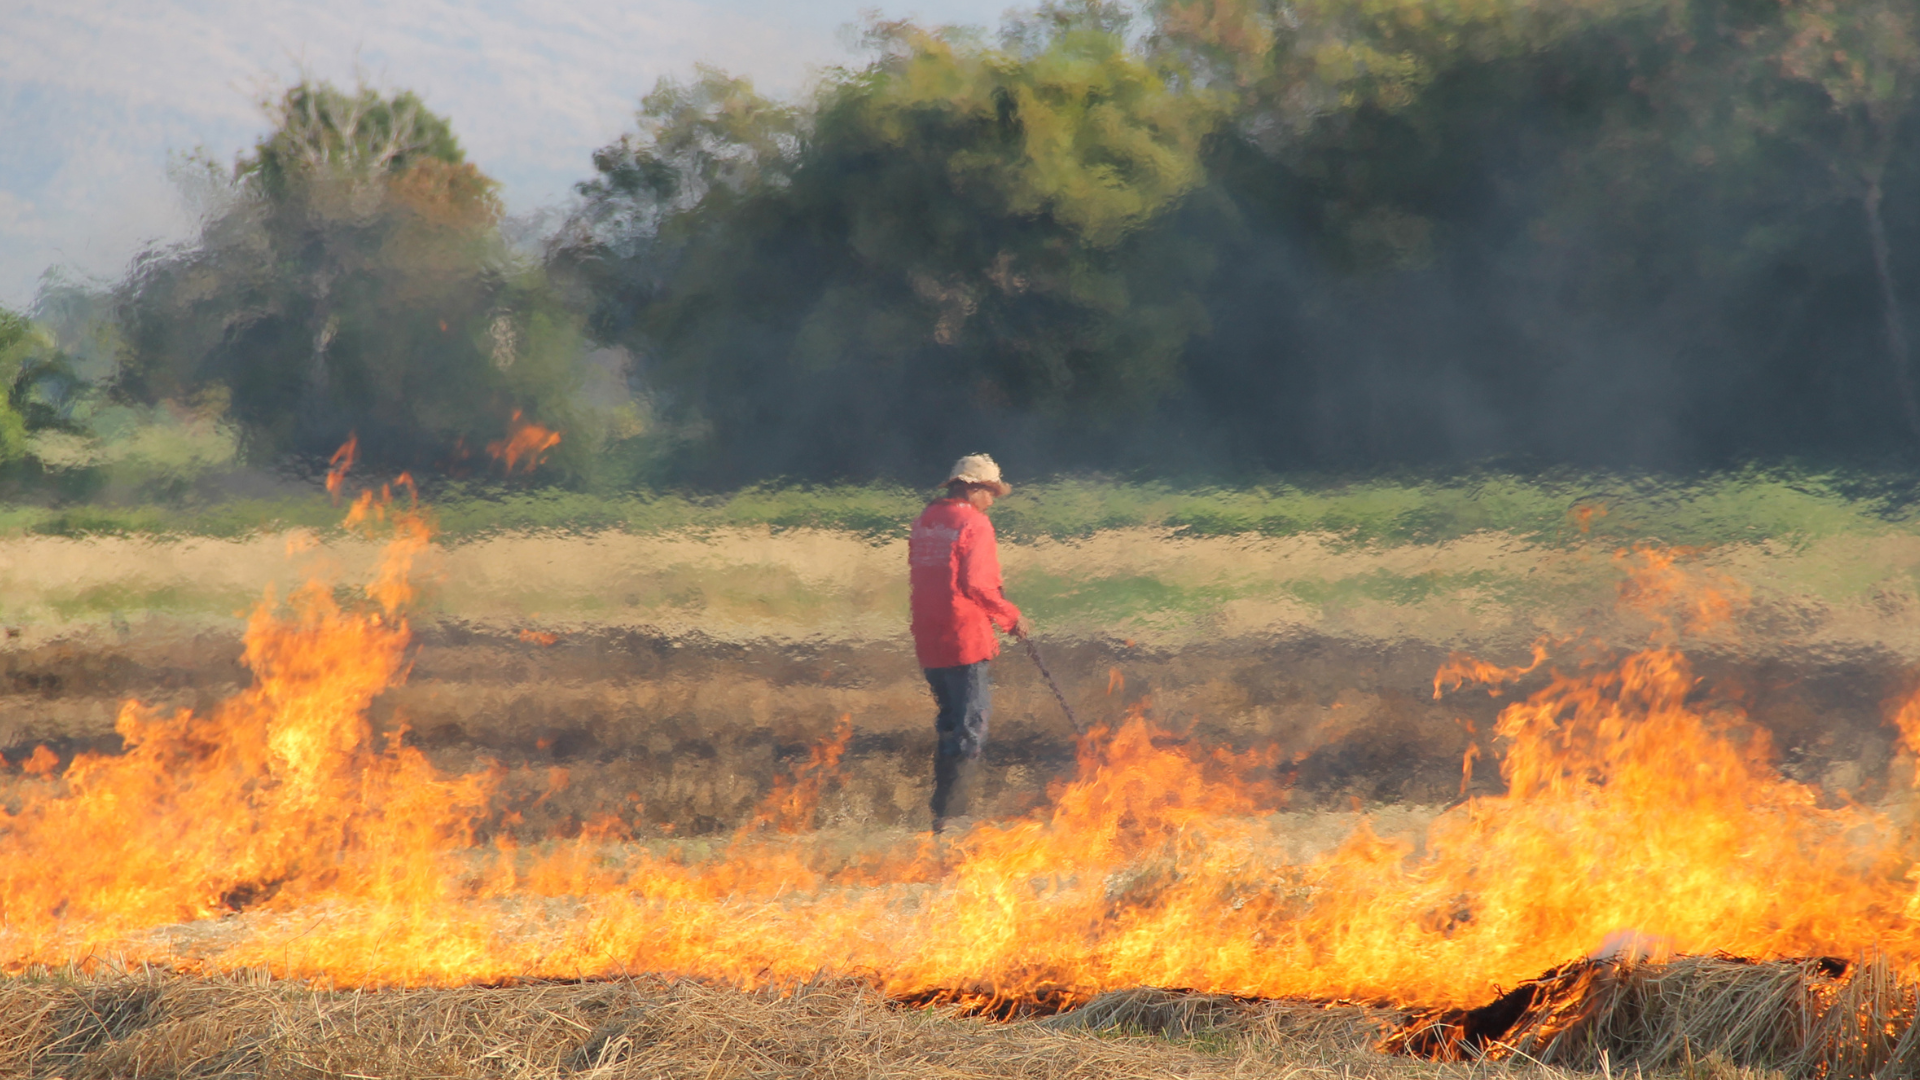 Stubble burning: farming practices v. health risks